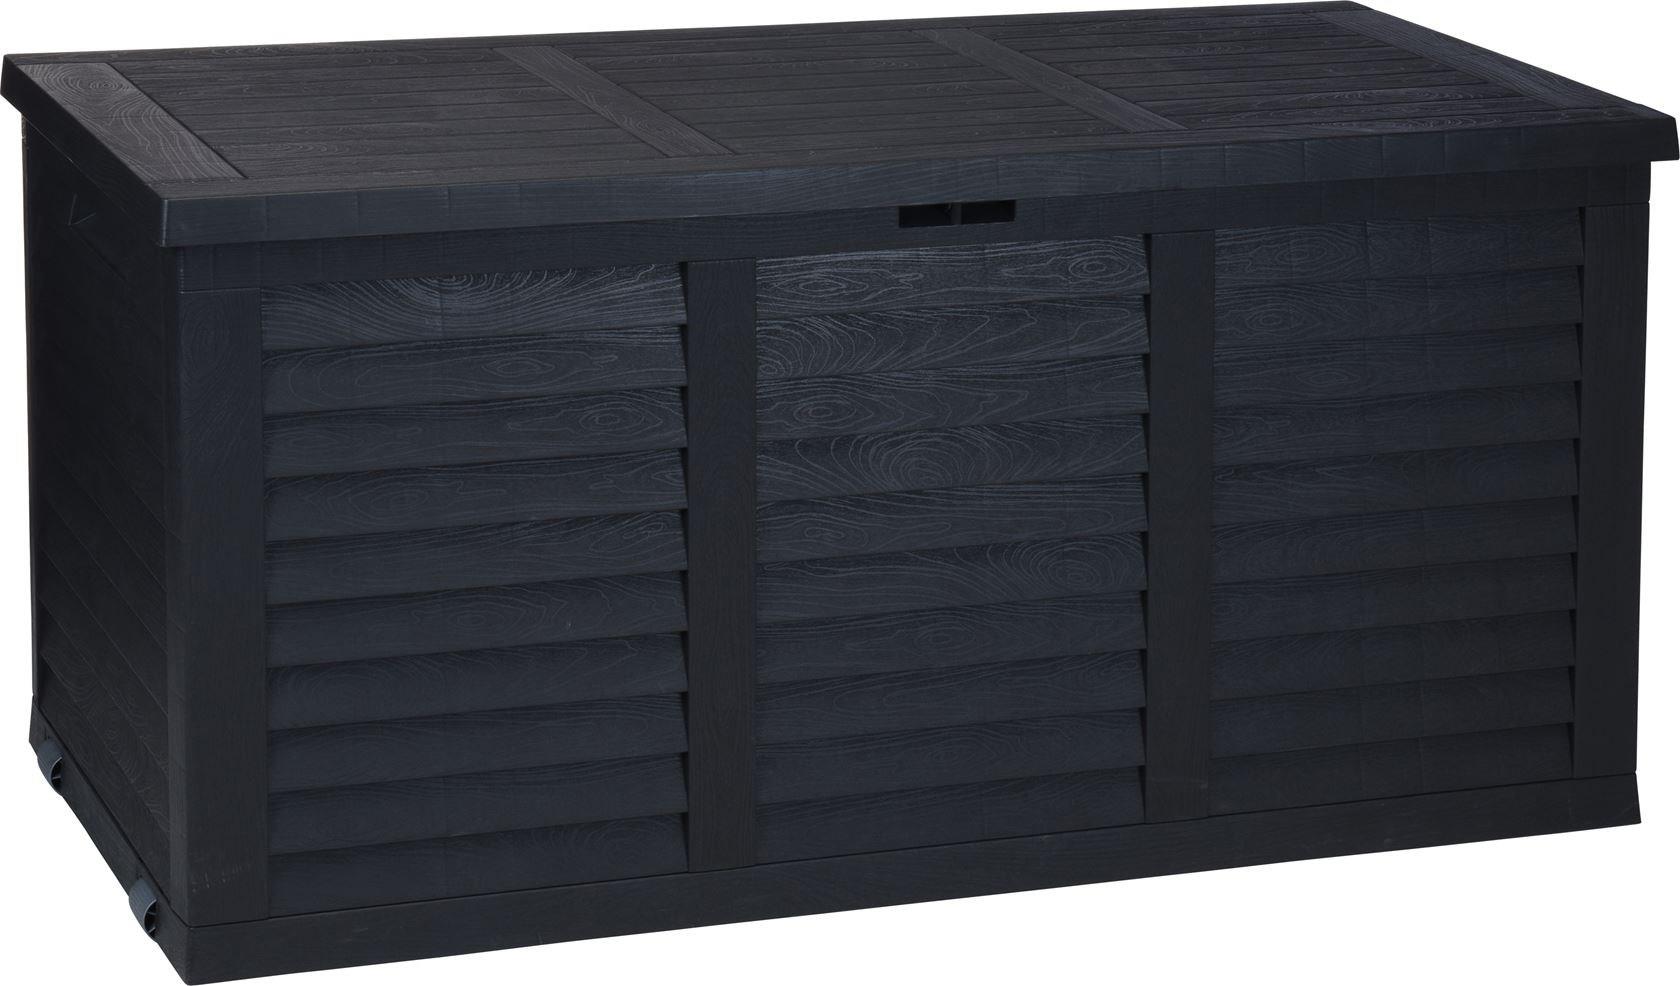 Garden Storage Box With Wheels 119cm x 52cm x 58cm | 300 Litre - Dark Grey